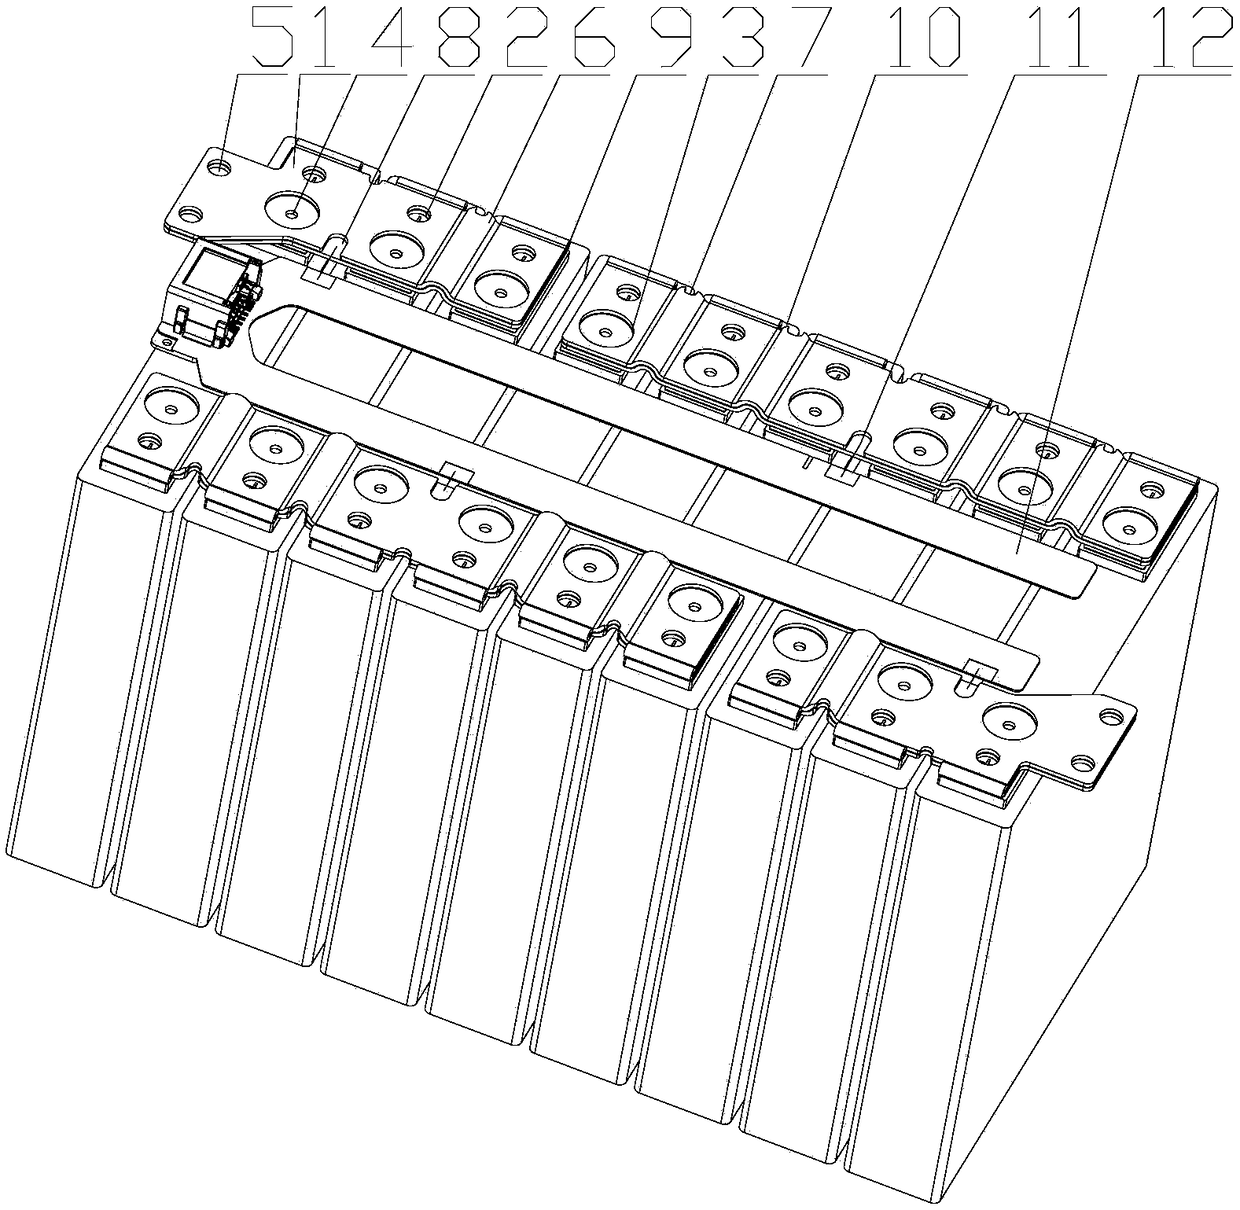 Busbar of high-rate discharging module